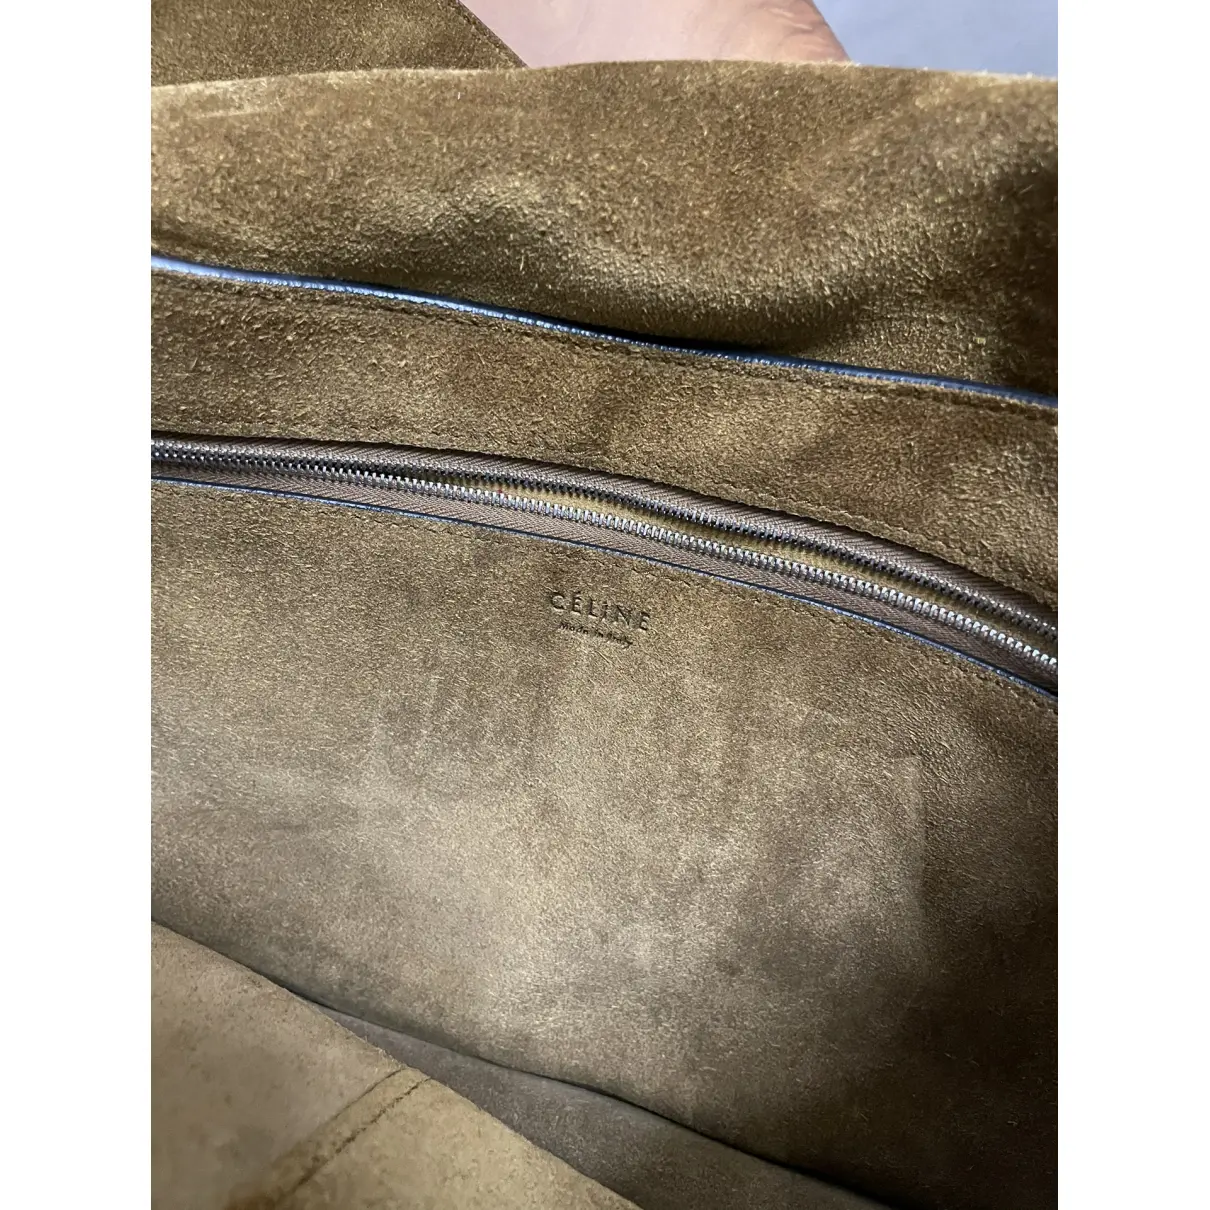 Buy Celine Diamond Clutch faux fur handbag online - Vintage